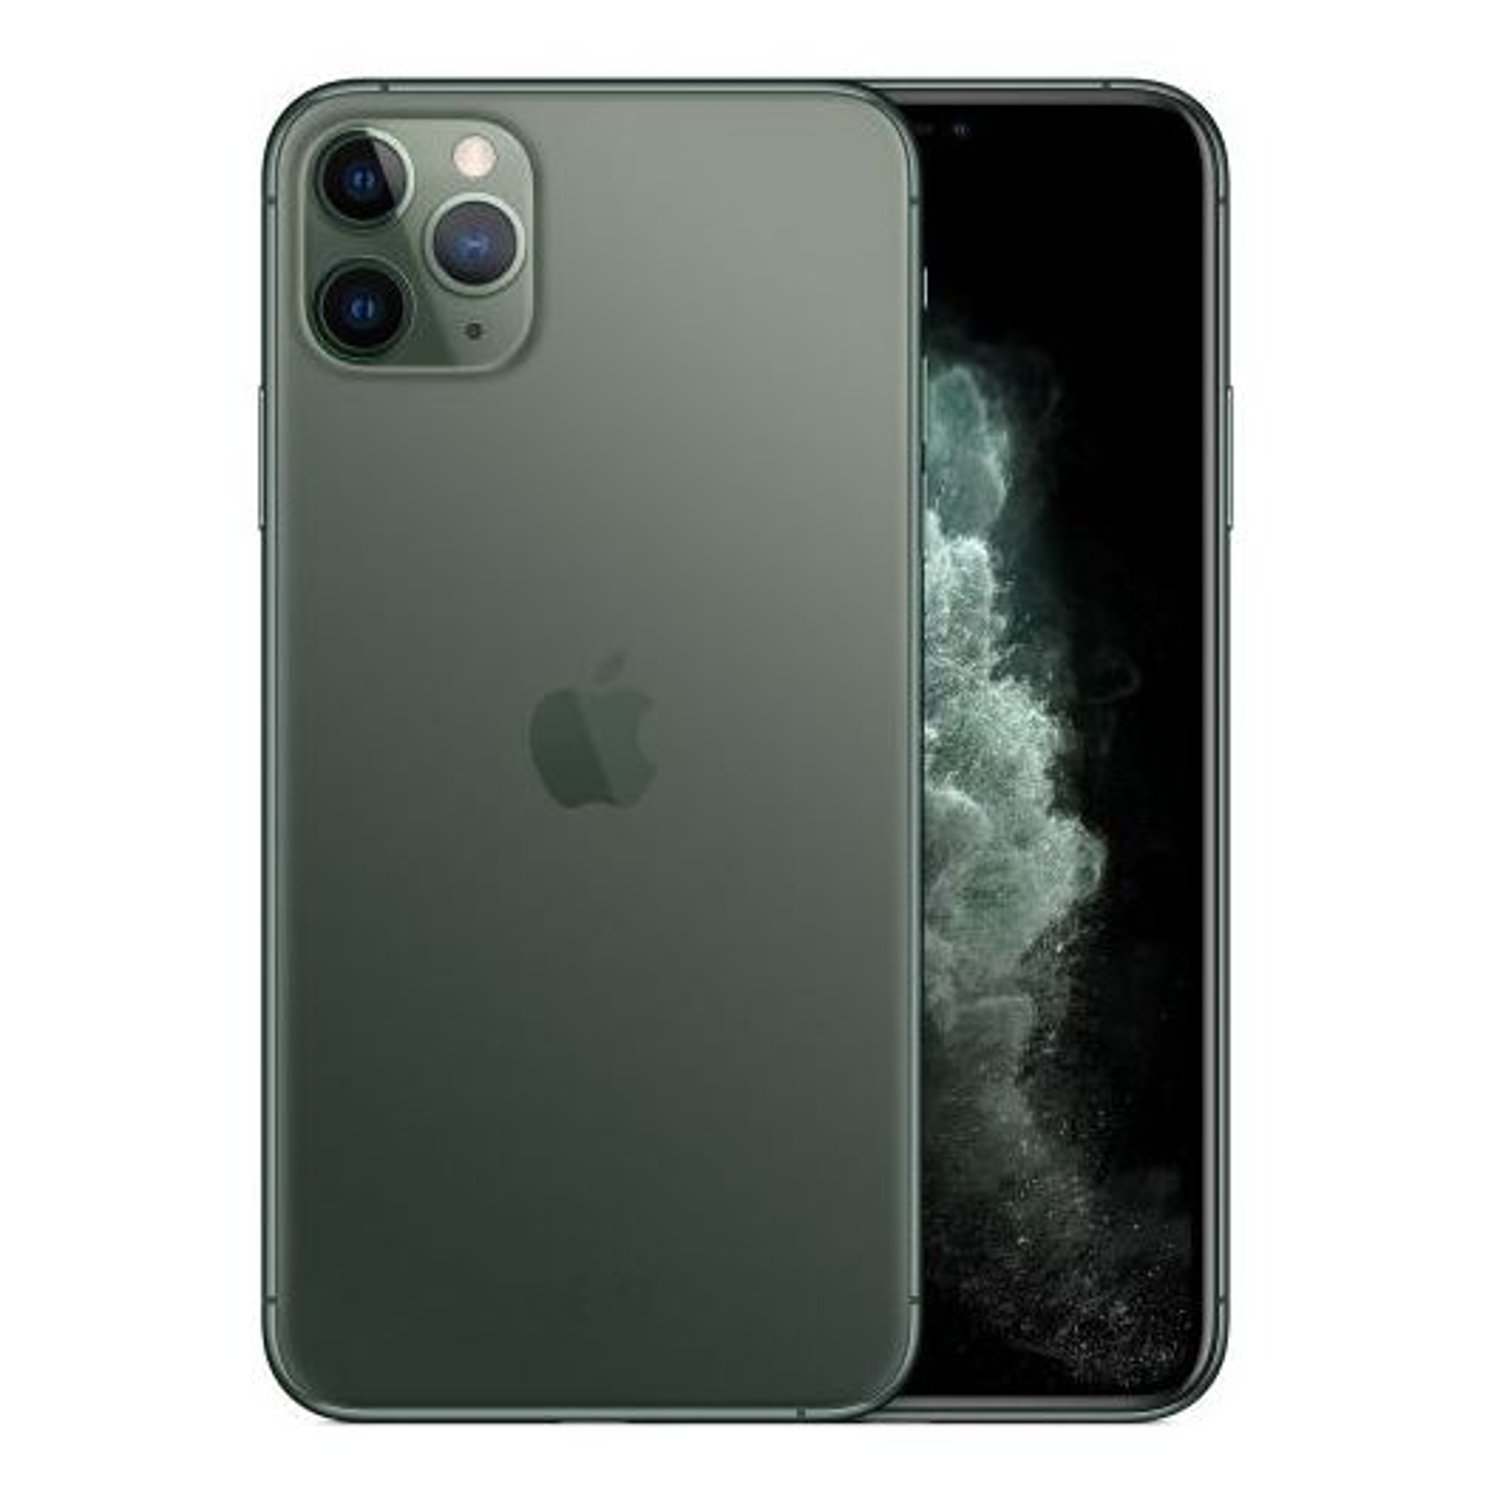 Apple iPhone 11 Pro Max (256GB) – Midnight Green